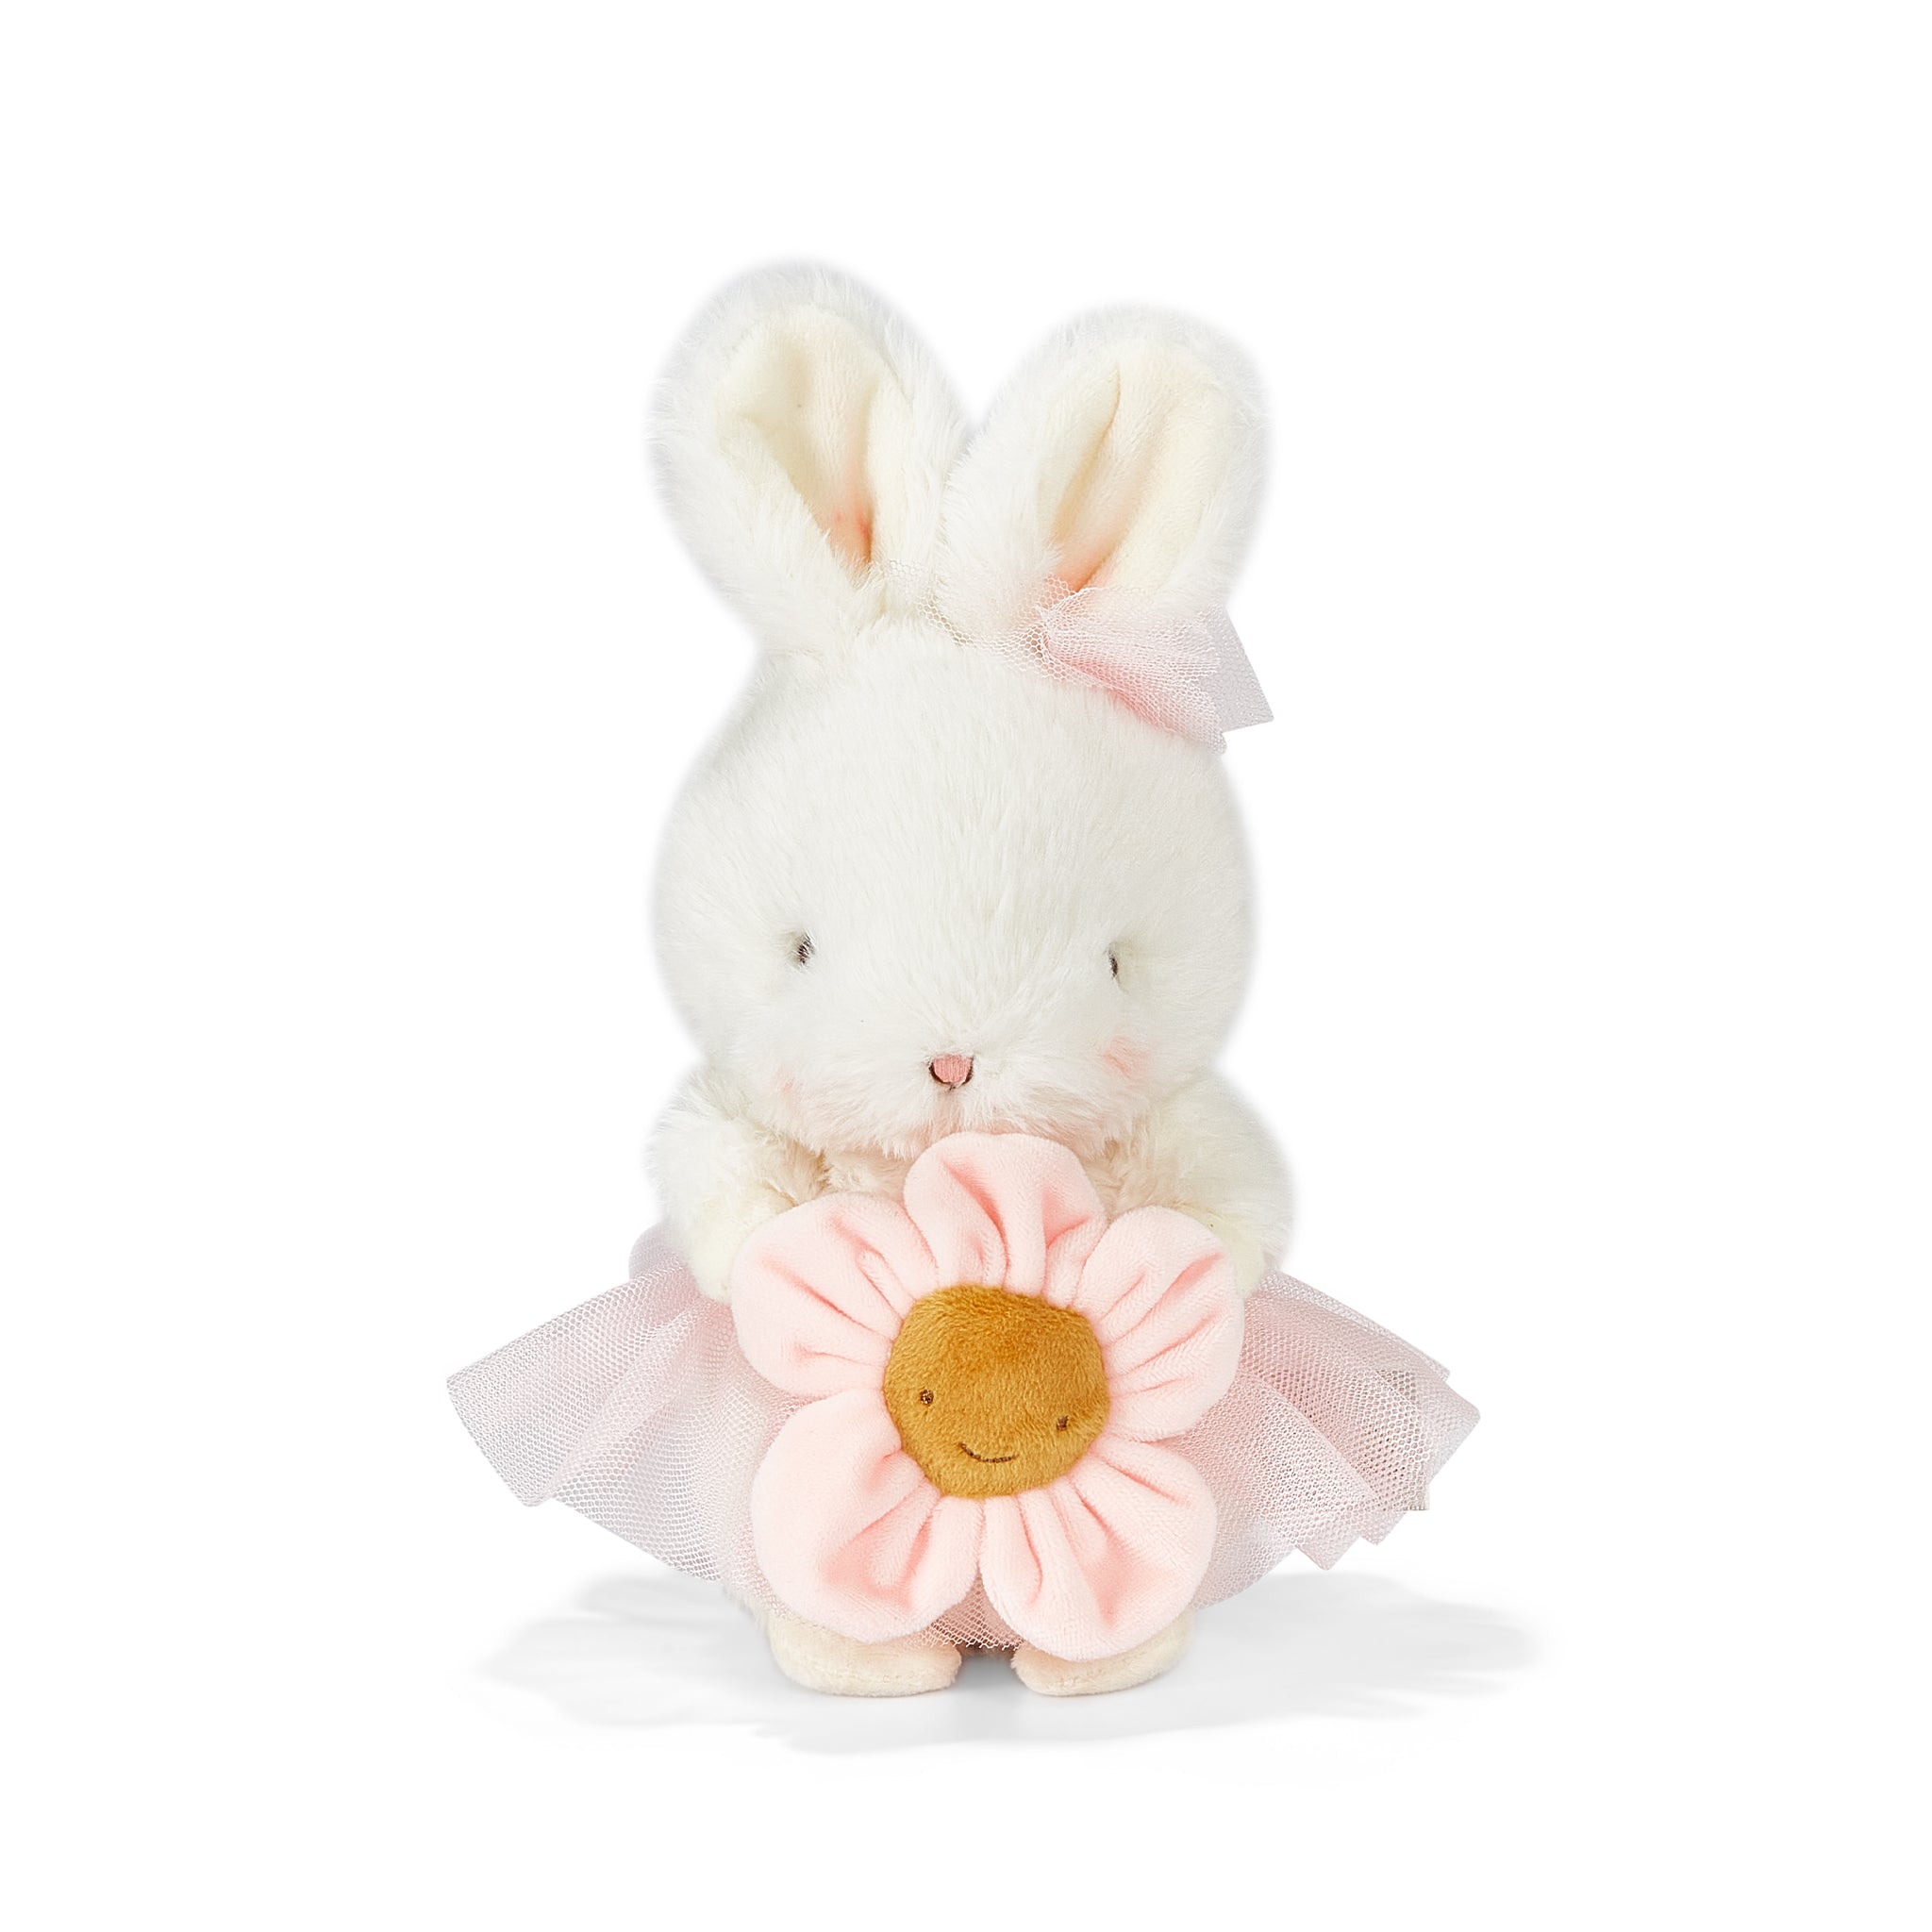 100900: Blossom Bunny - Cricket Island Friend